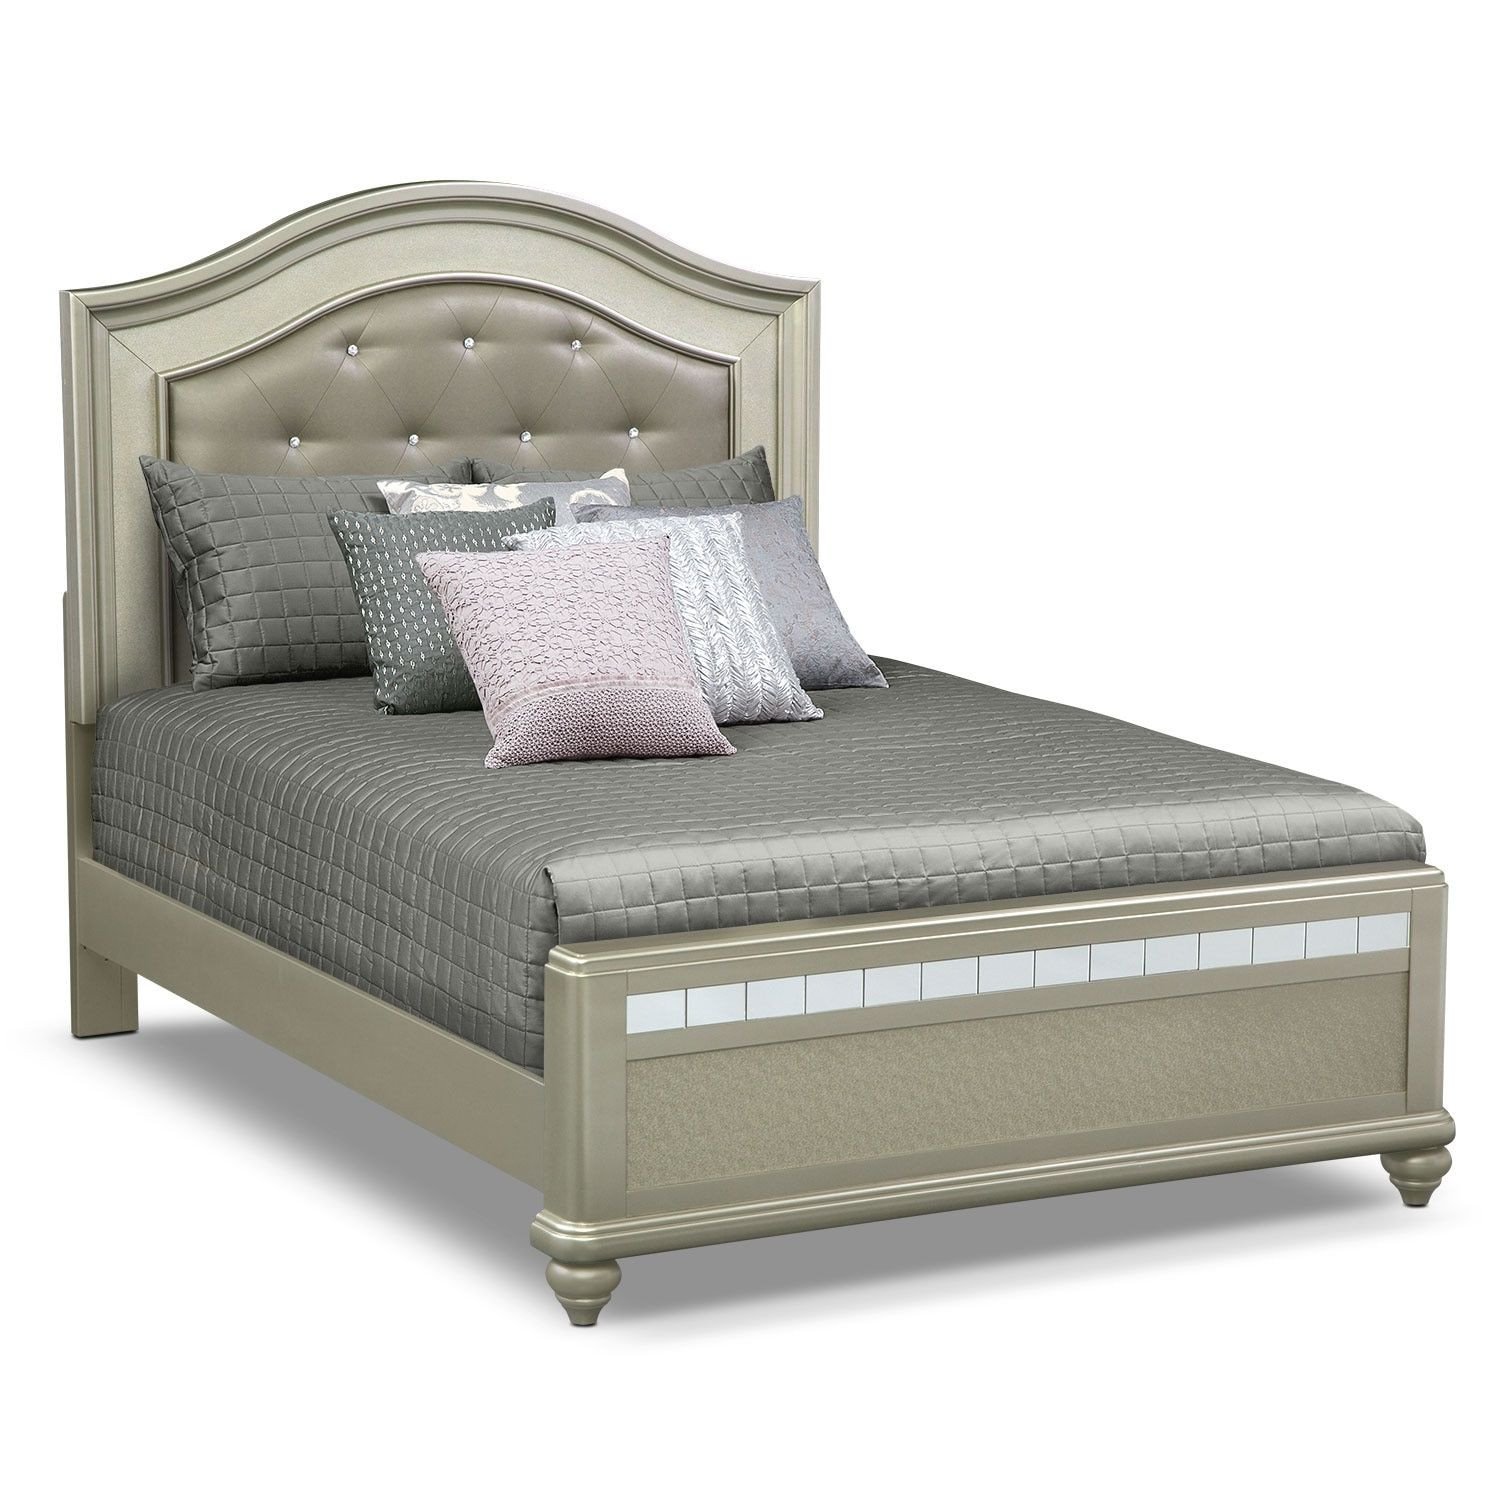 Value City Bedroom Furniture Elegant Serena Queen Bed Platinum